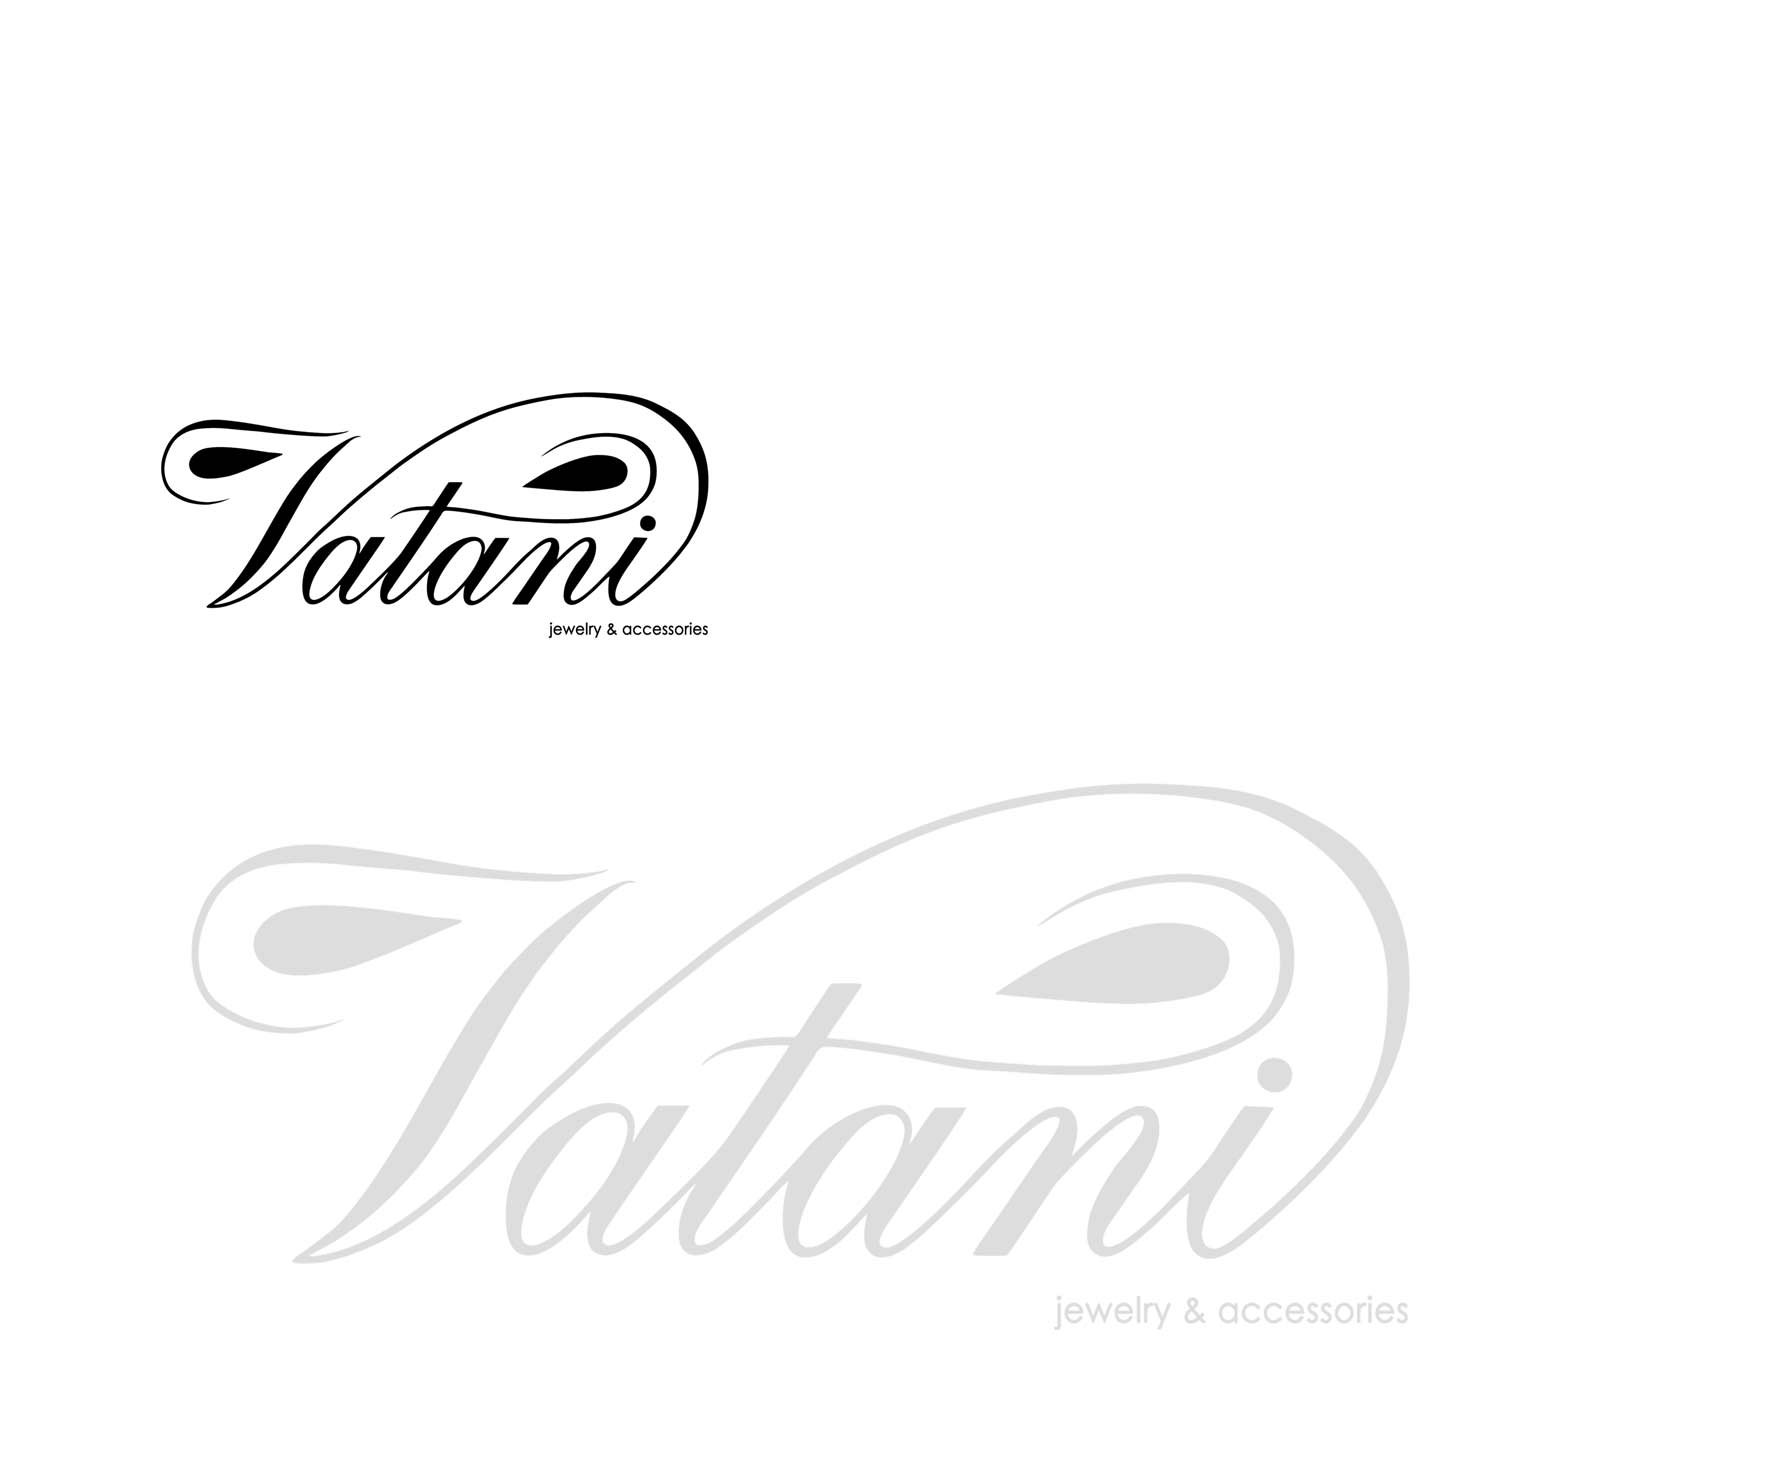 Vatani - Jewelry & Accessories